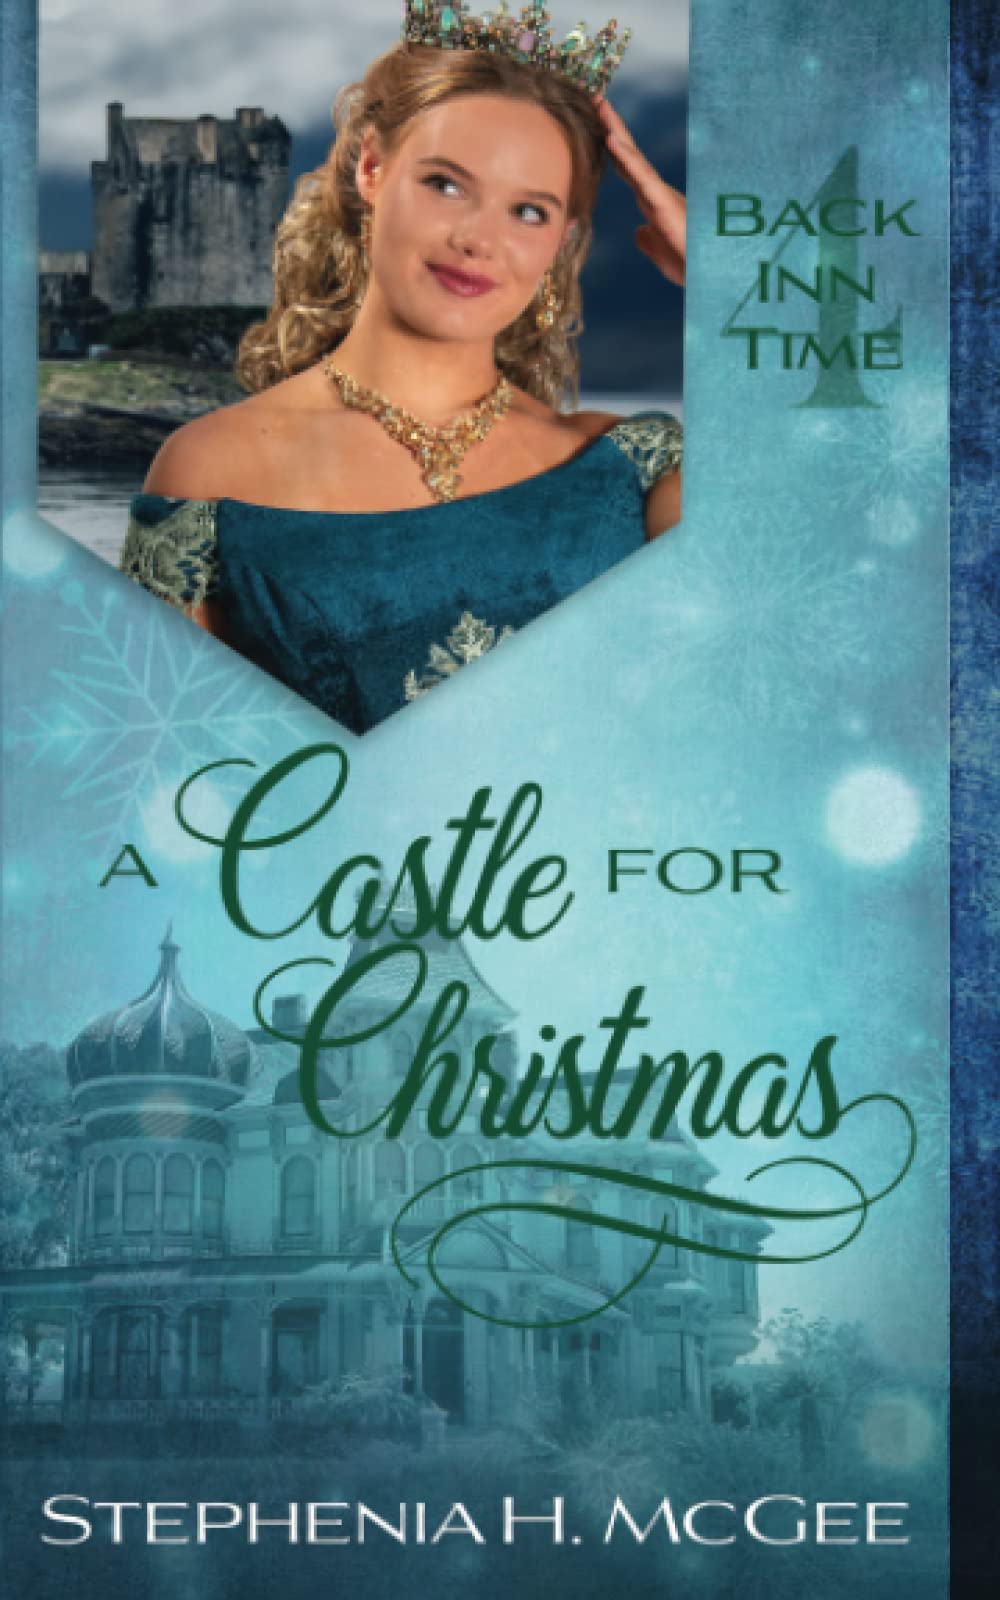 A Castle for Christmas (The Back Inn Time Series) (paperback) Stephenia McGee